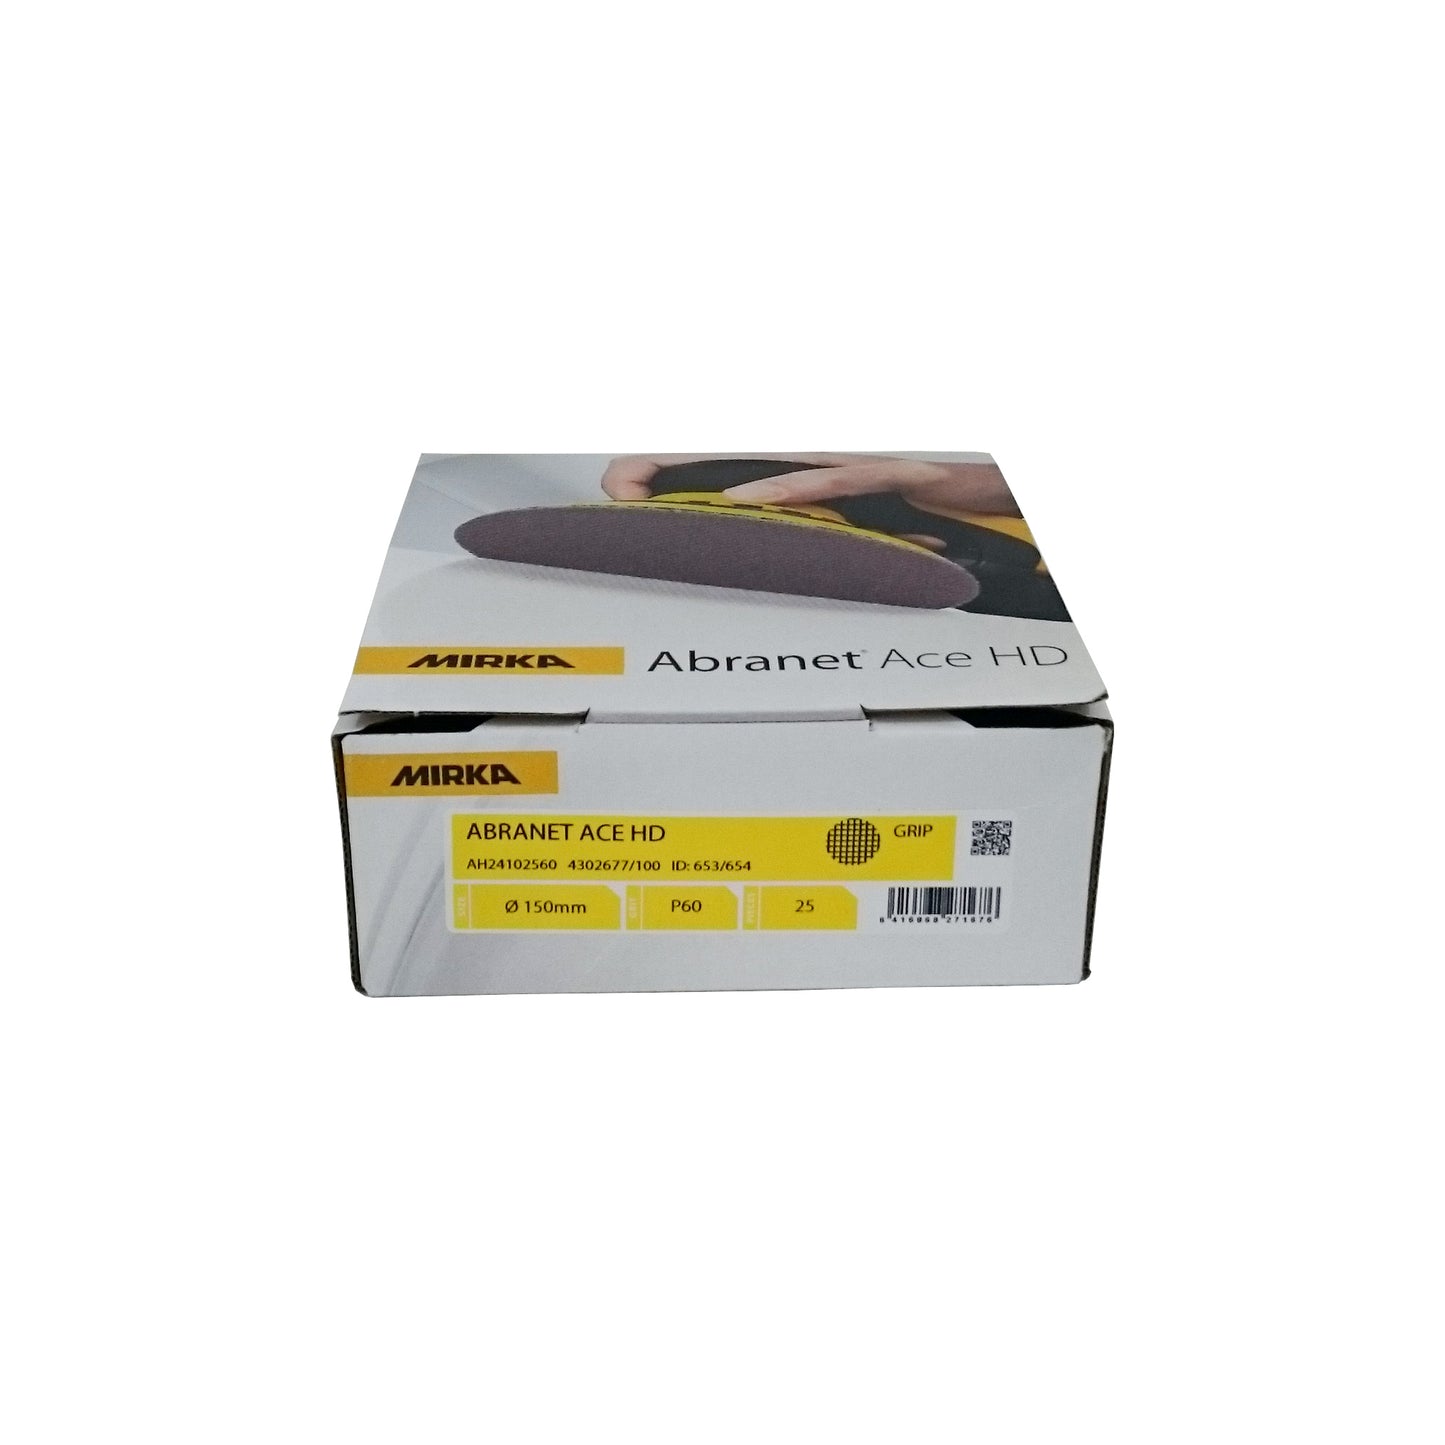 Mirka Abranet ACE HD Sanding Discs - 150mm - Box of 25 - Various Grip/Grits